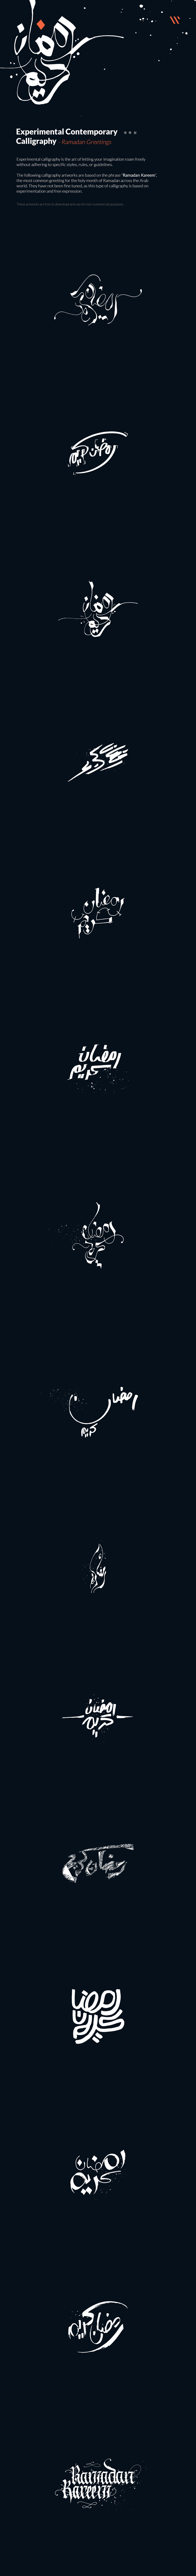 Calligraphy   typography   ramadan kareem greetings islam art free Style islamic